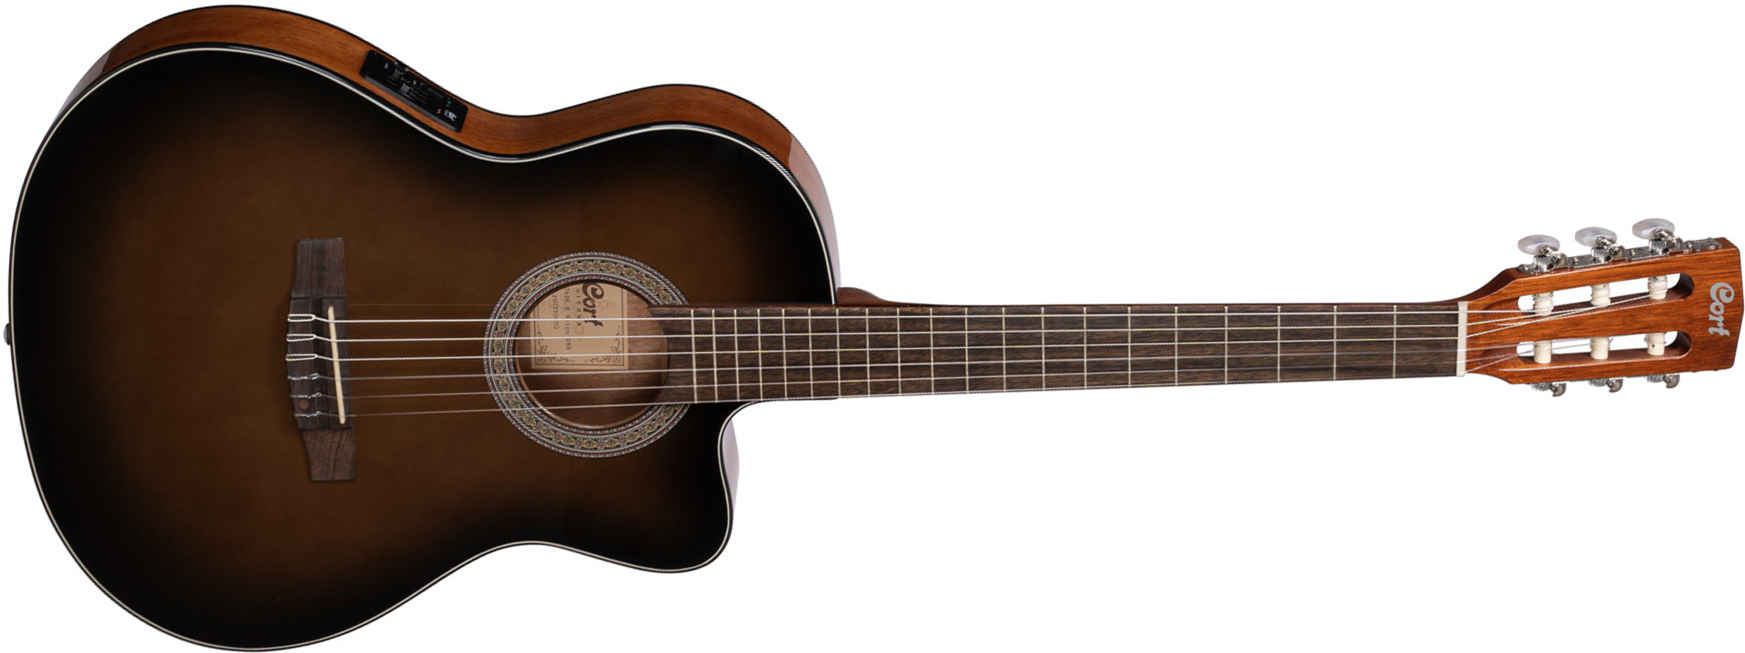 Cort Jade E Nylon Cw Epicea Acajou Lau - Dark Brown Burst - Classical guitar 4/4 size - Main picture